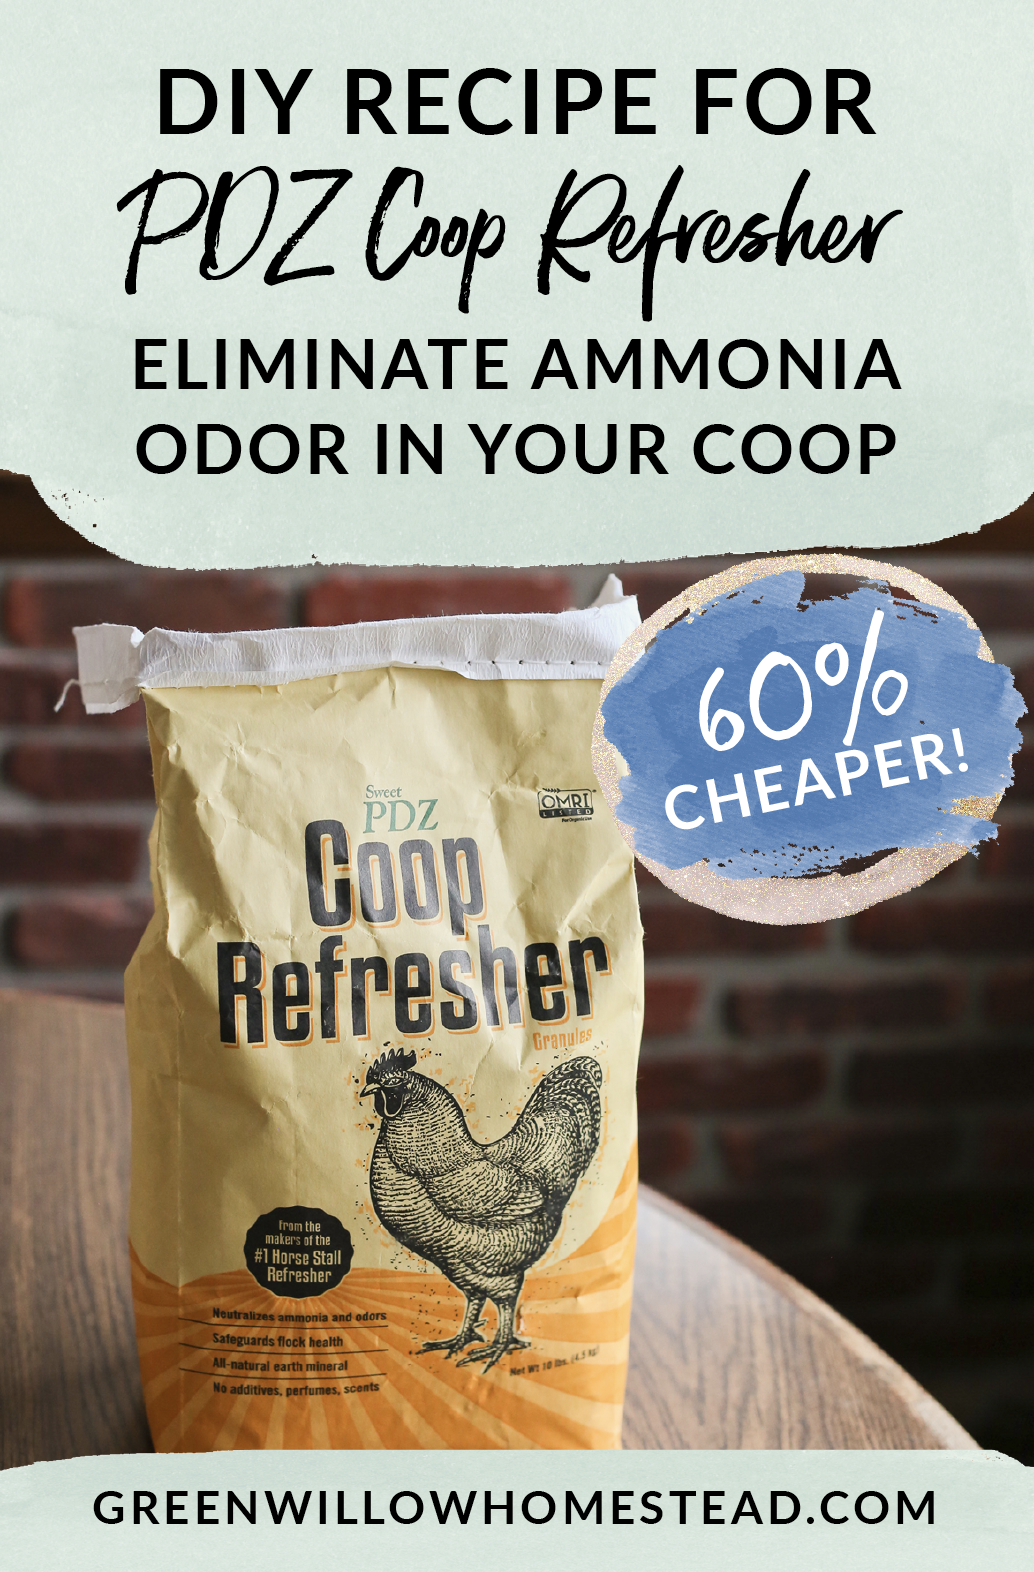 DIY Recipe for Sweet PDZ Coop Refresher to get rid of ammonia odor in your chicken coop